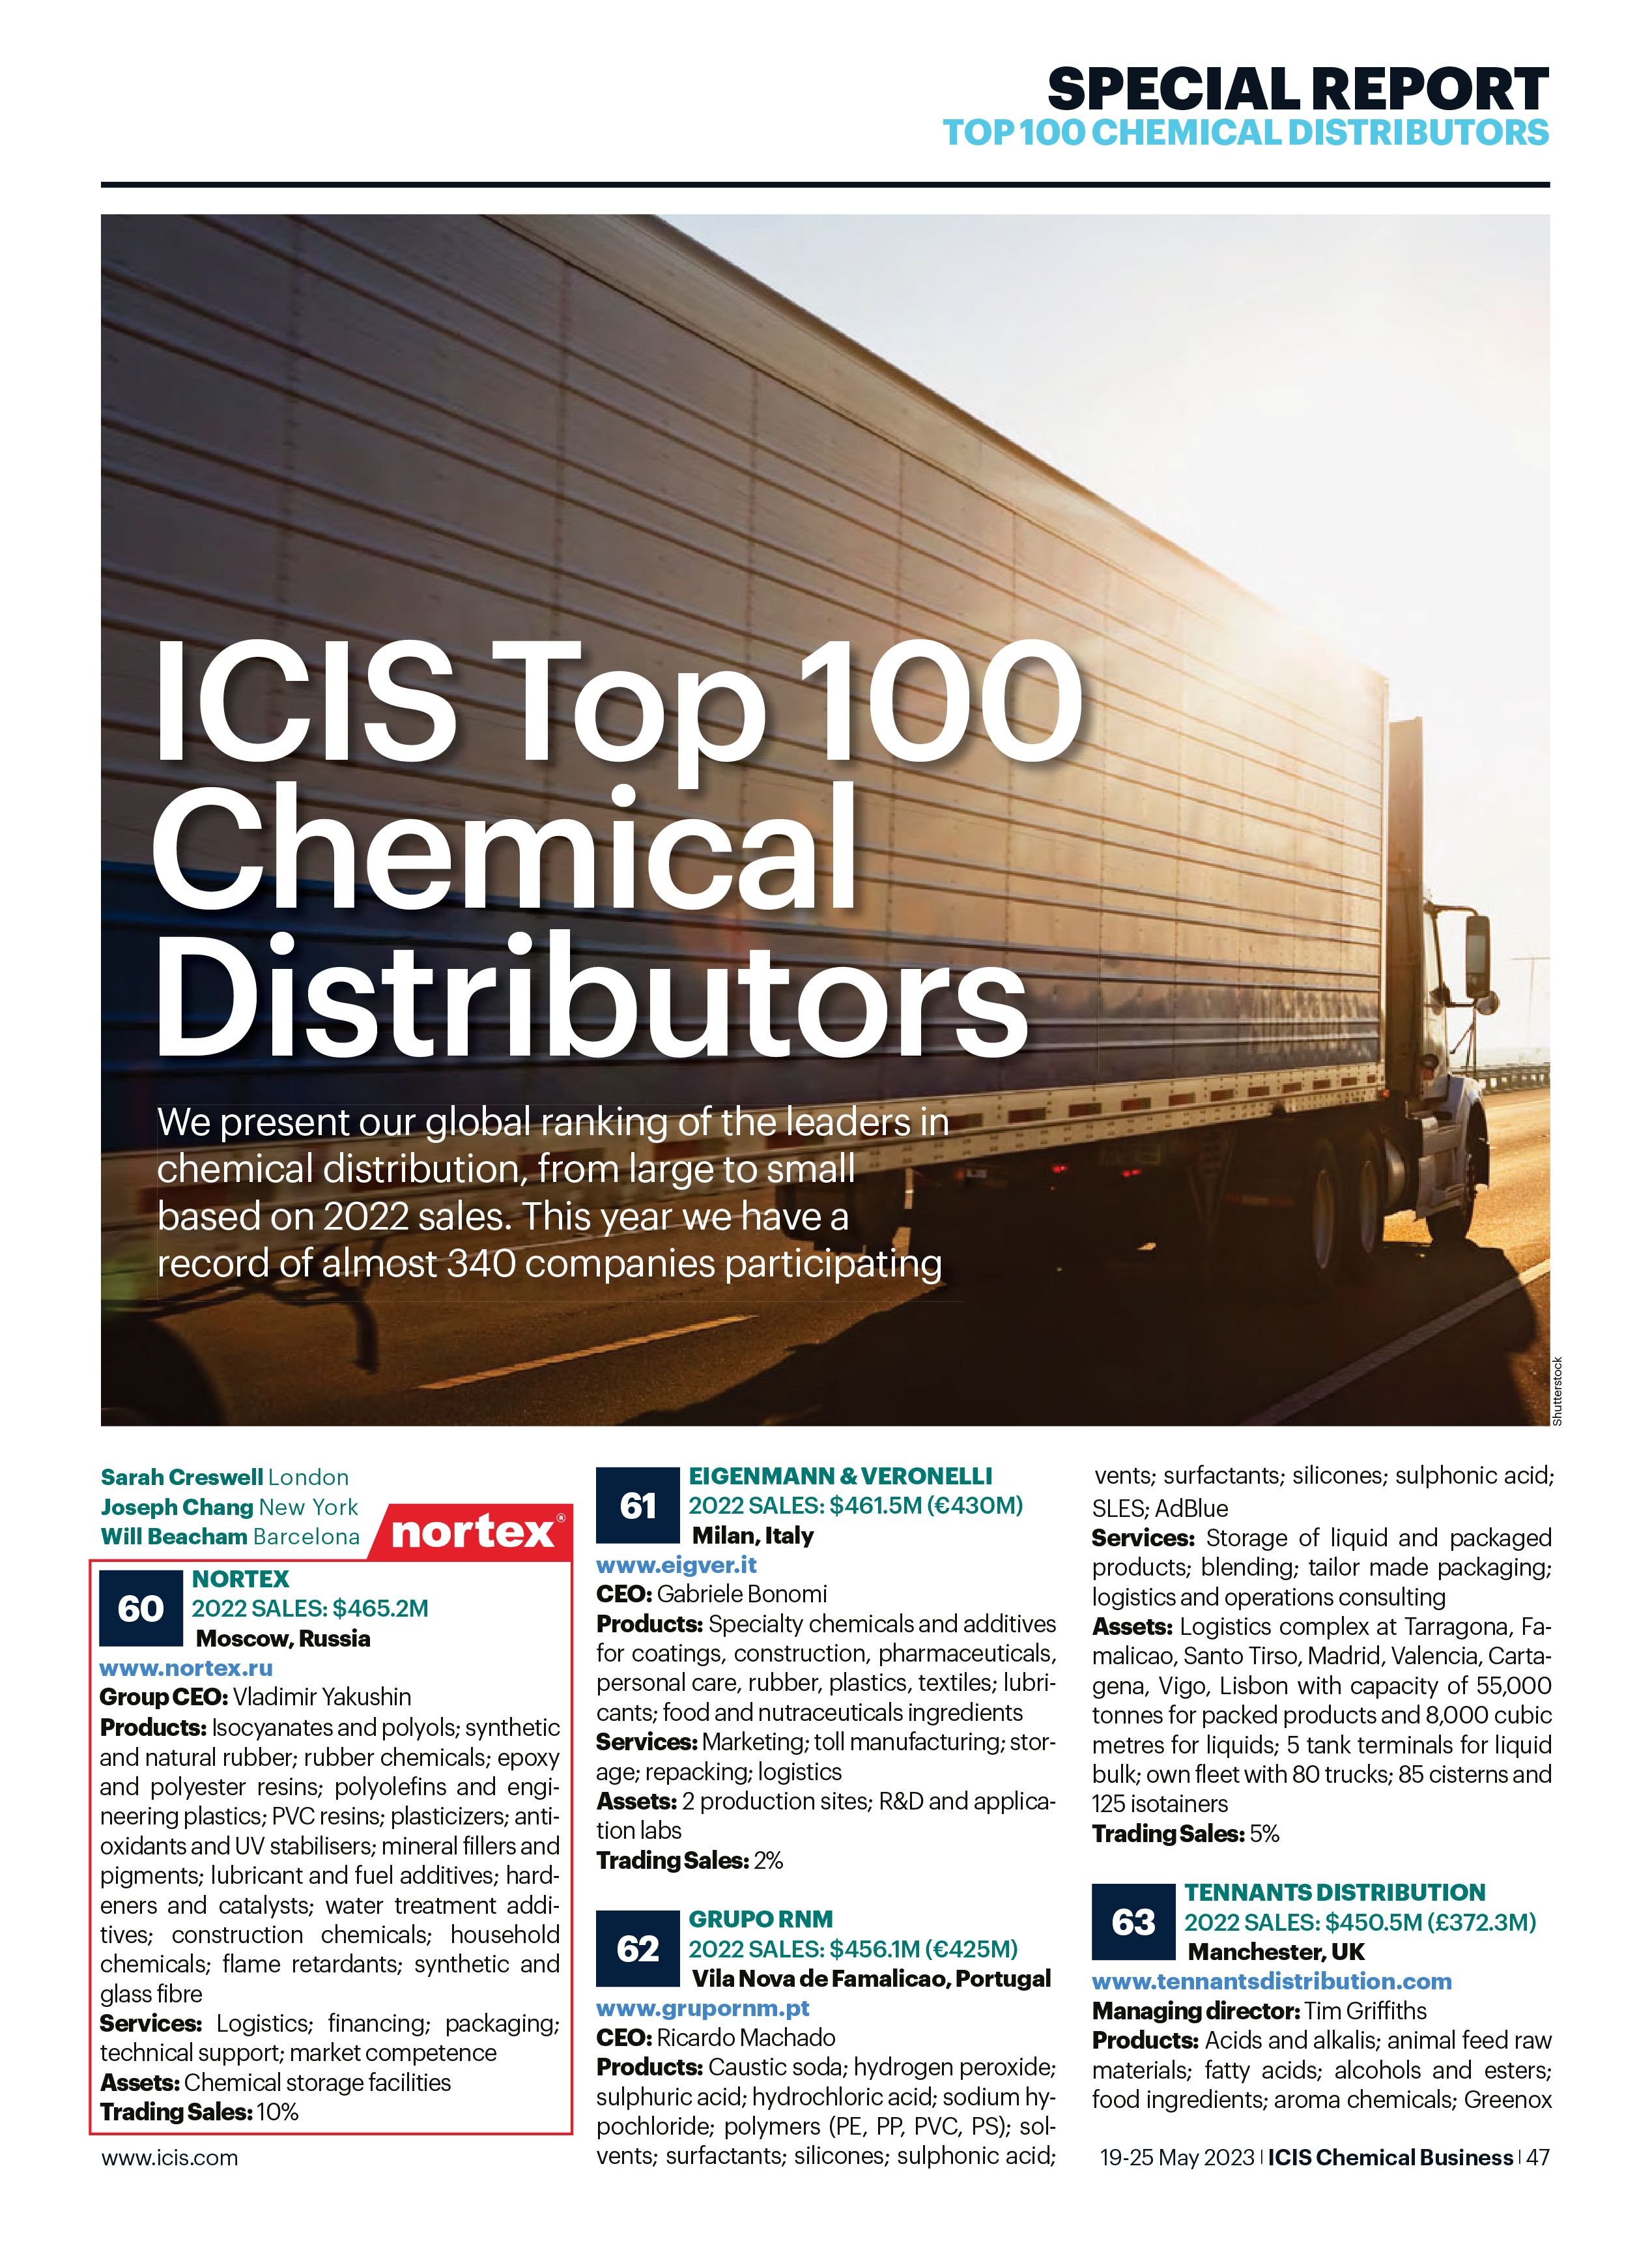 TOP-100 Chemical Distributors for 2022